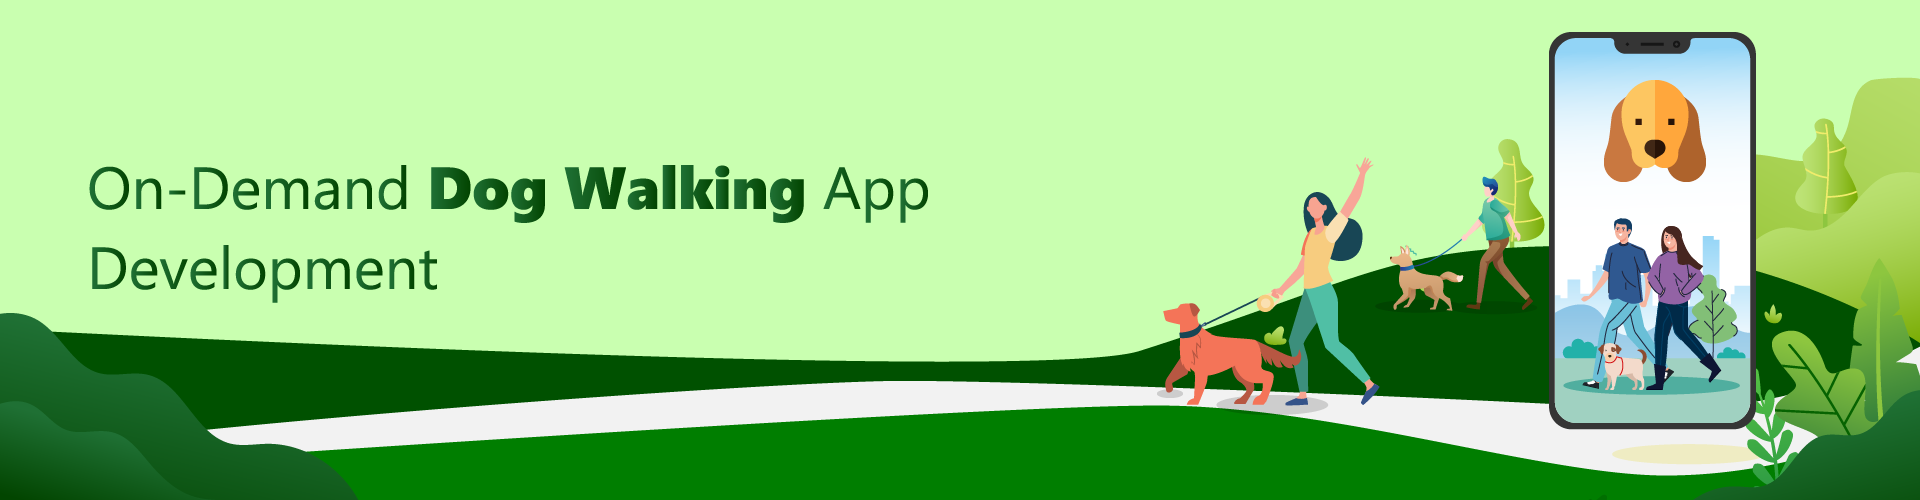 on-demand dog walking app